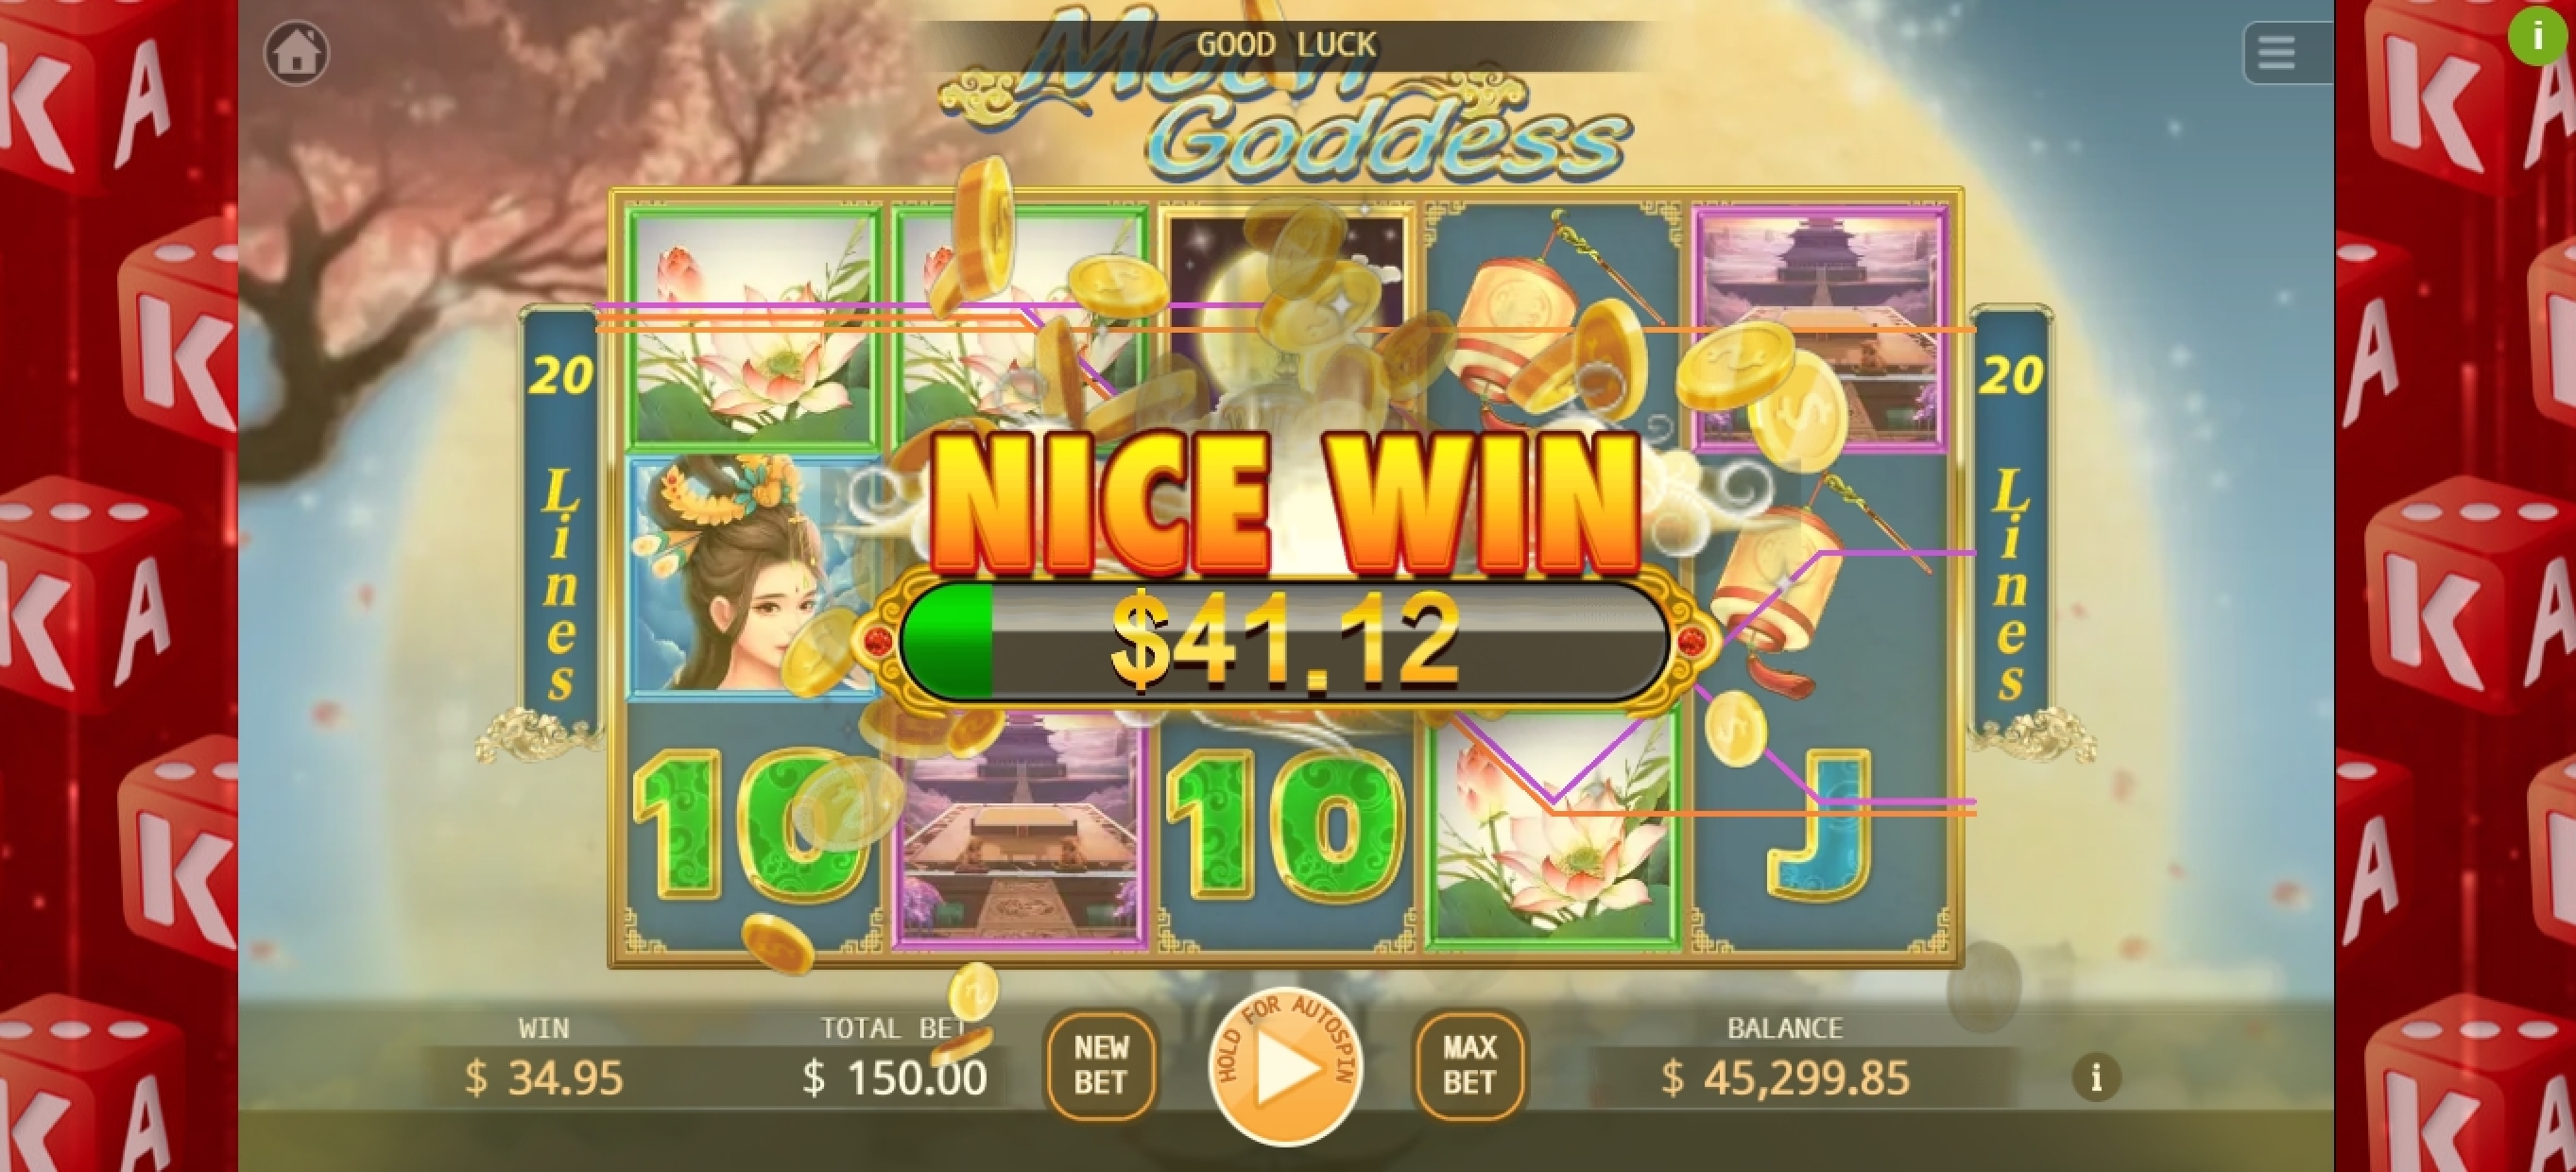 Win Money in Moon Goddess Free Slot Game by KA Gaming